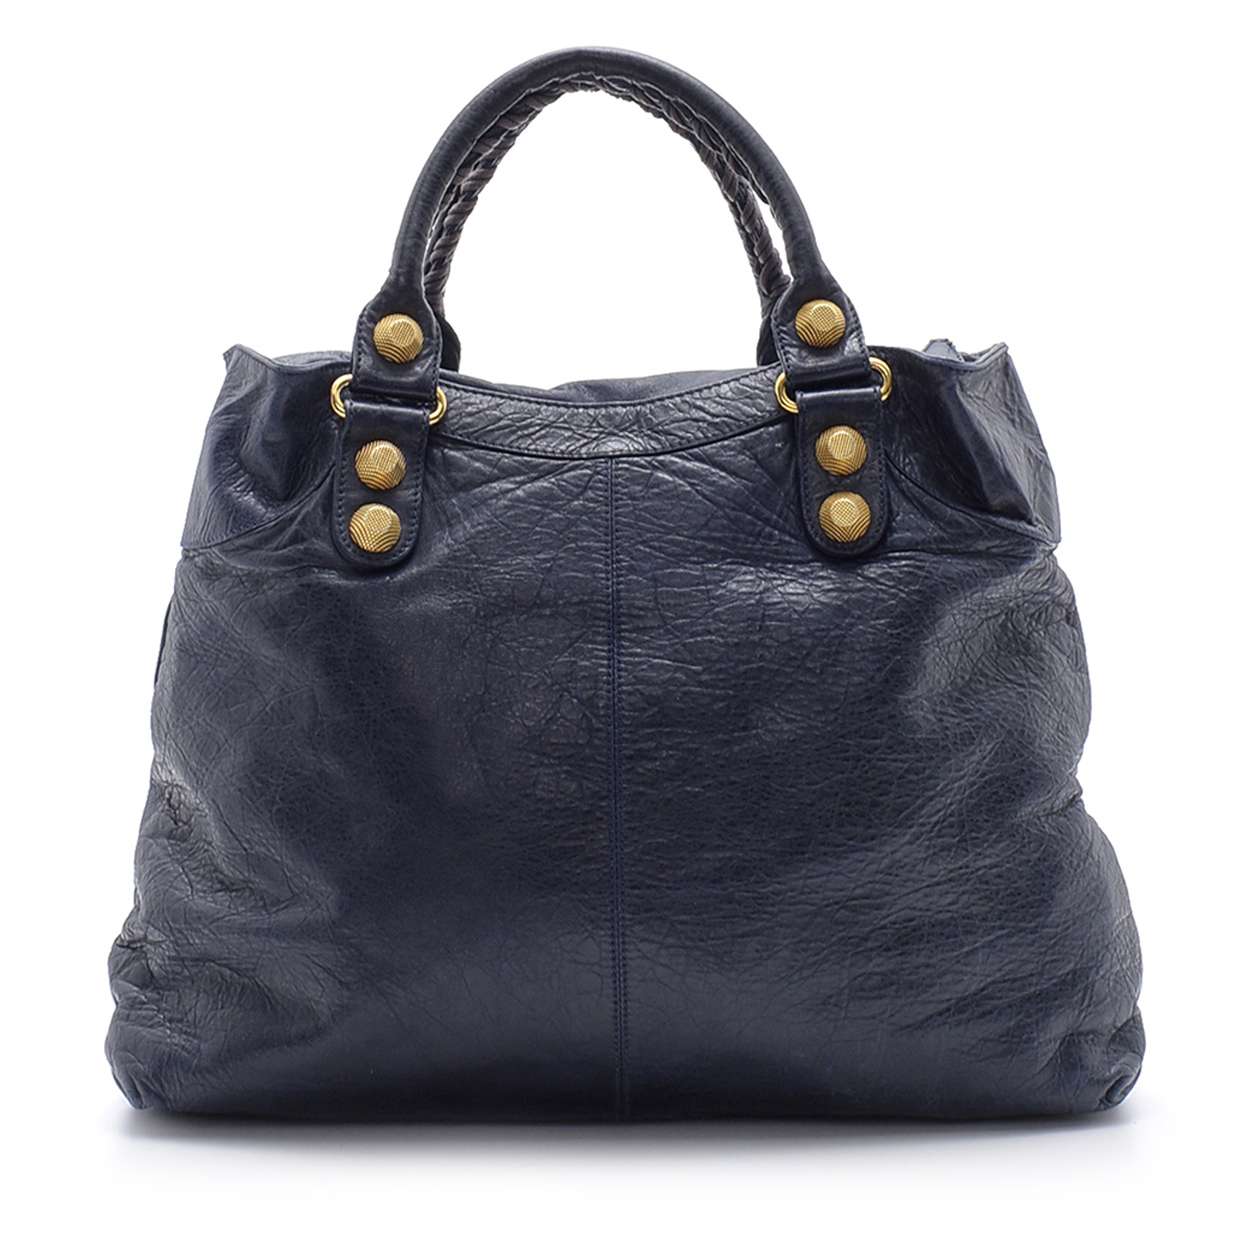 Balenciaga - Navy Blue Lambskin Leather Giant Velo Bag